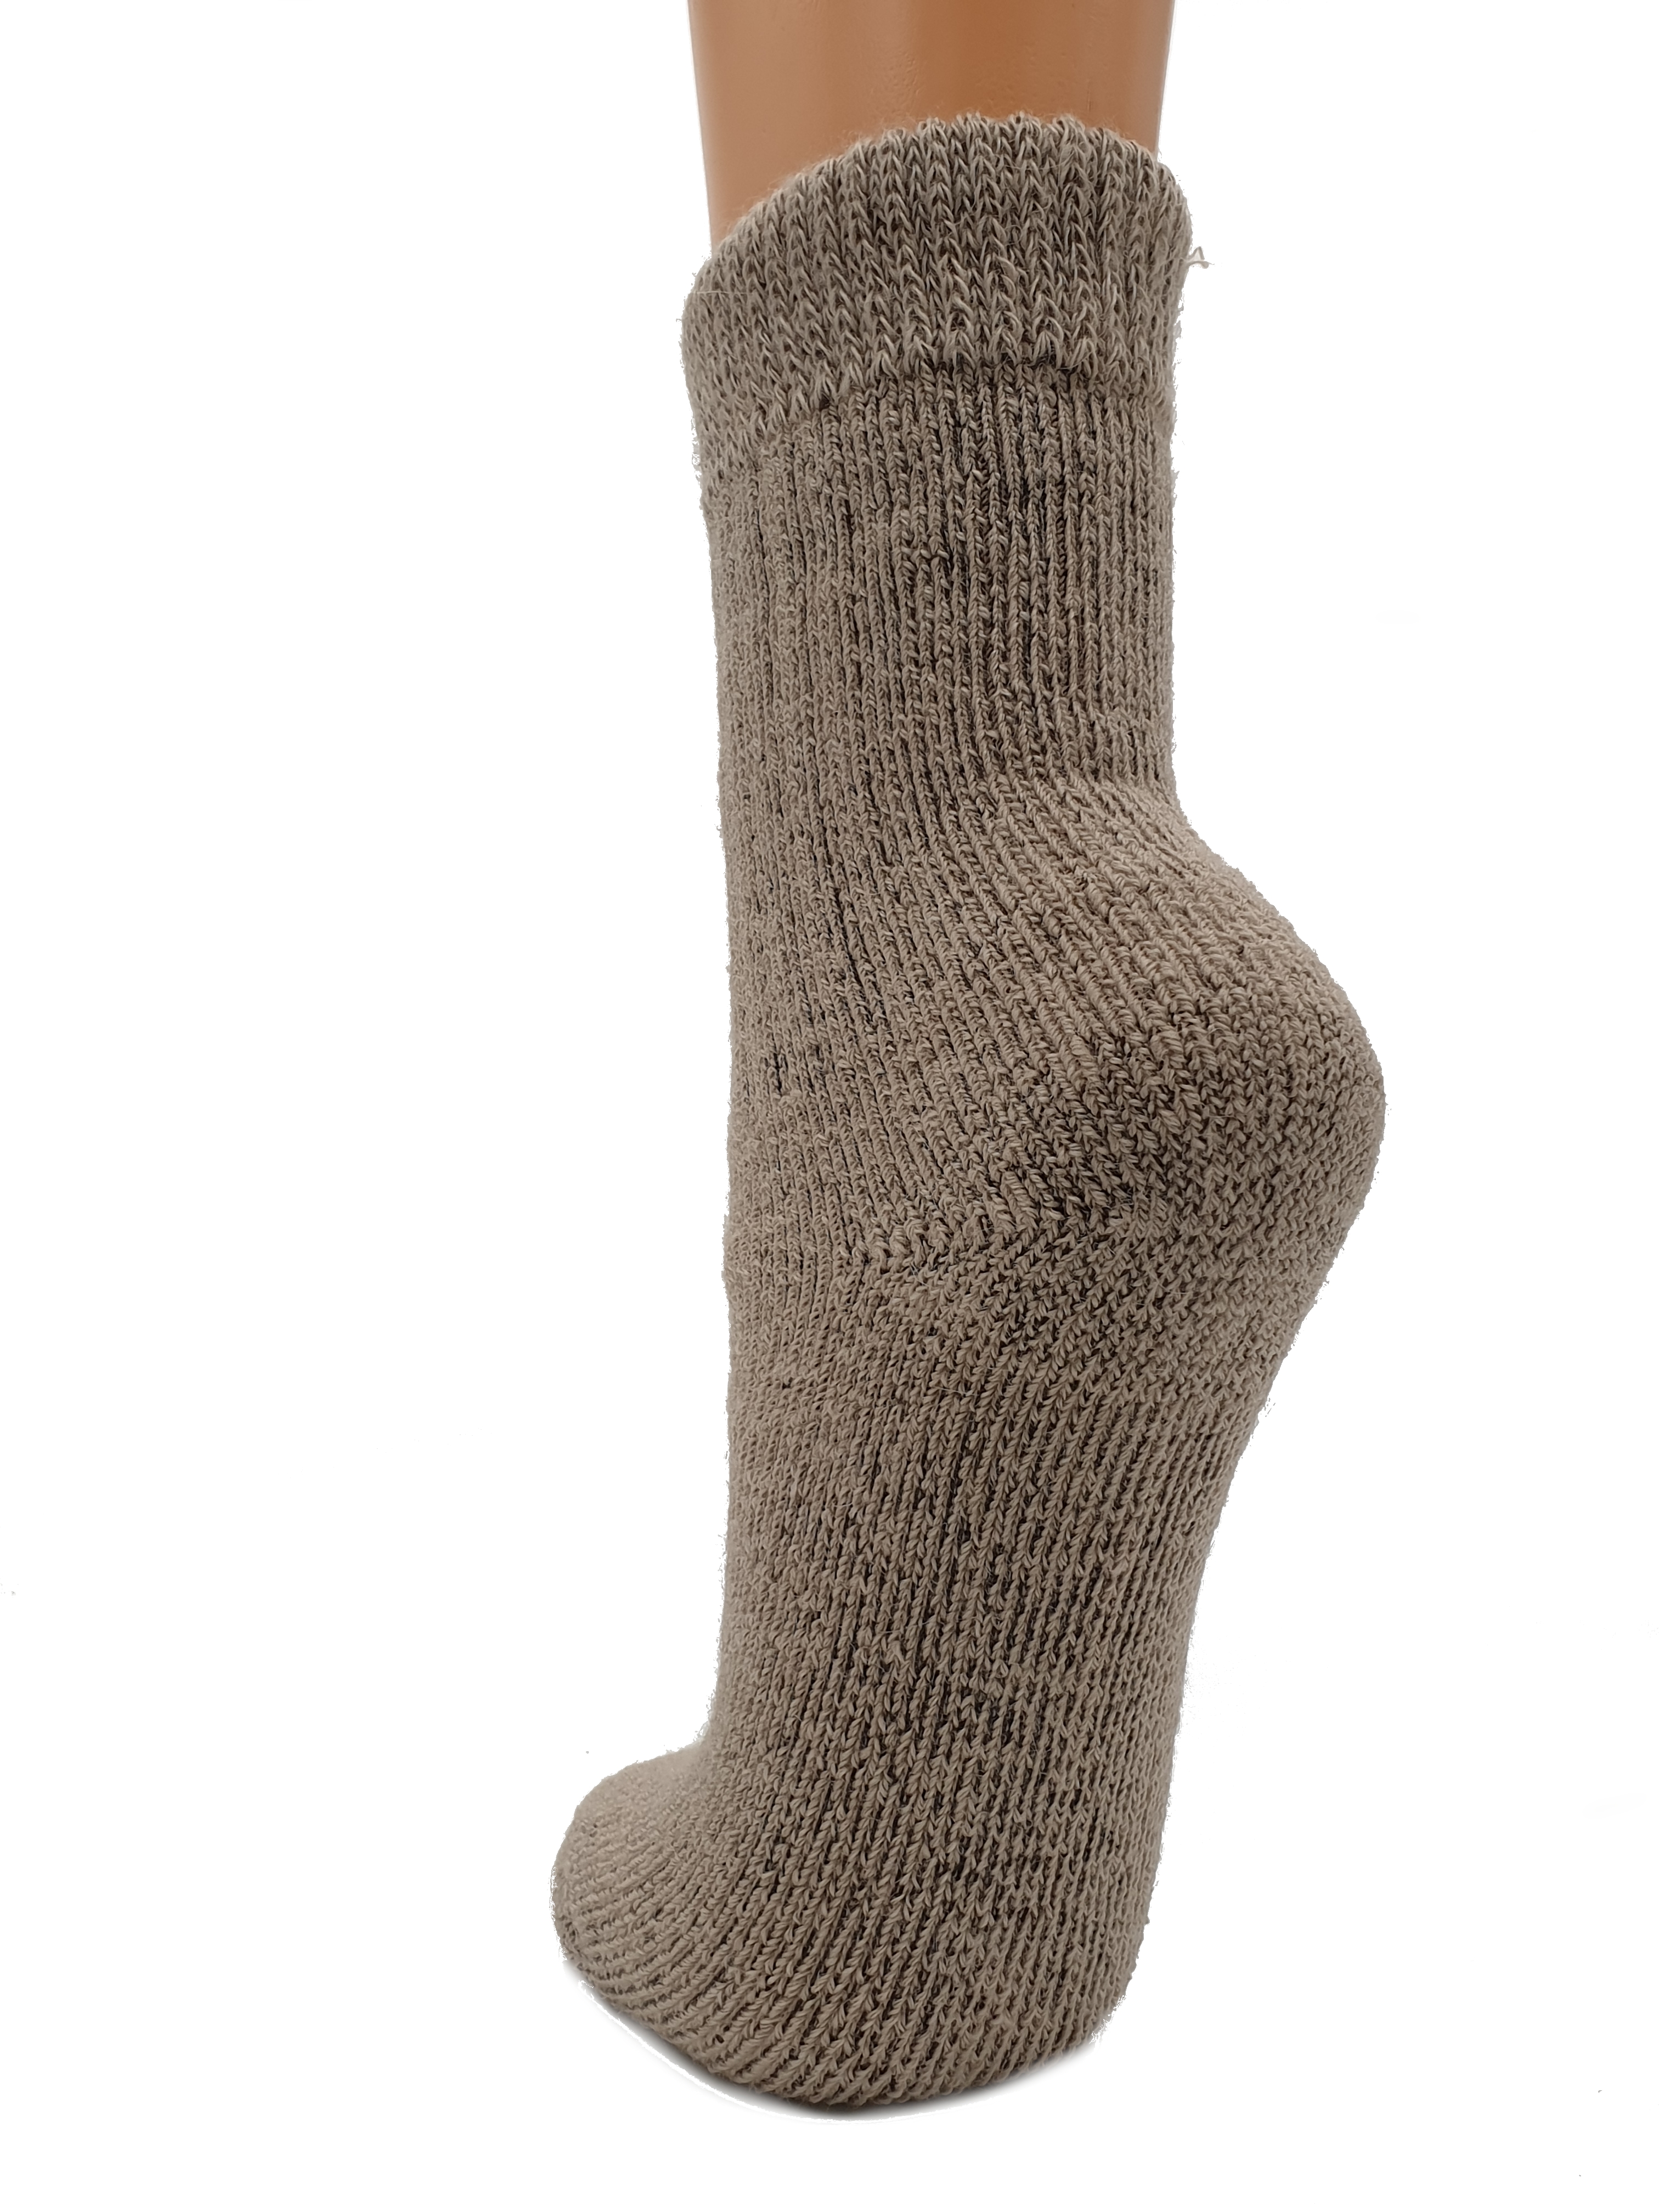 Alpaka-Socken für den Winter extra-warm